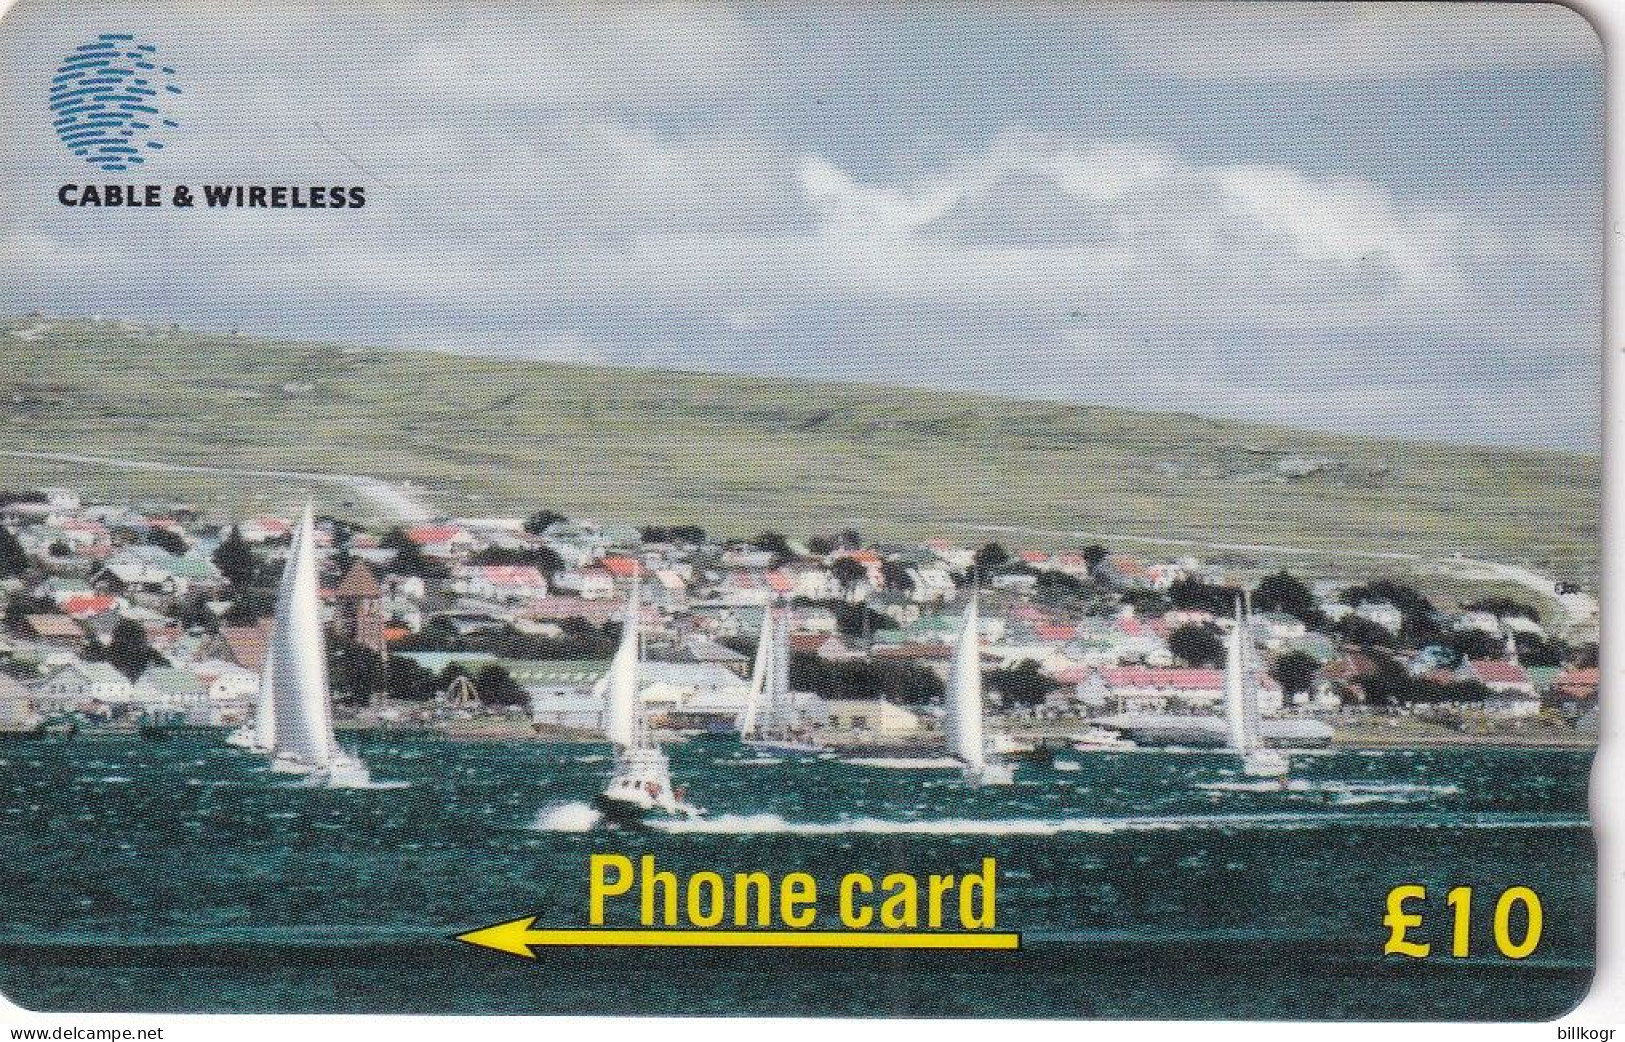 FALKLAND ISL.(GPT) - Millennium Odyssey, CN : 314CFKD/B, Tirage %20000, Used - Falkland